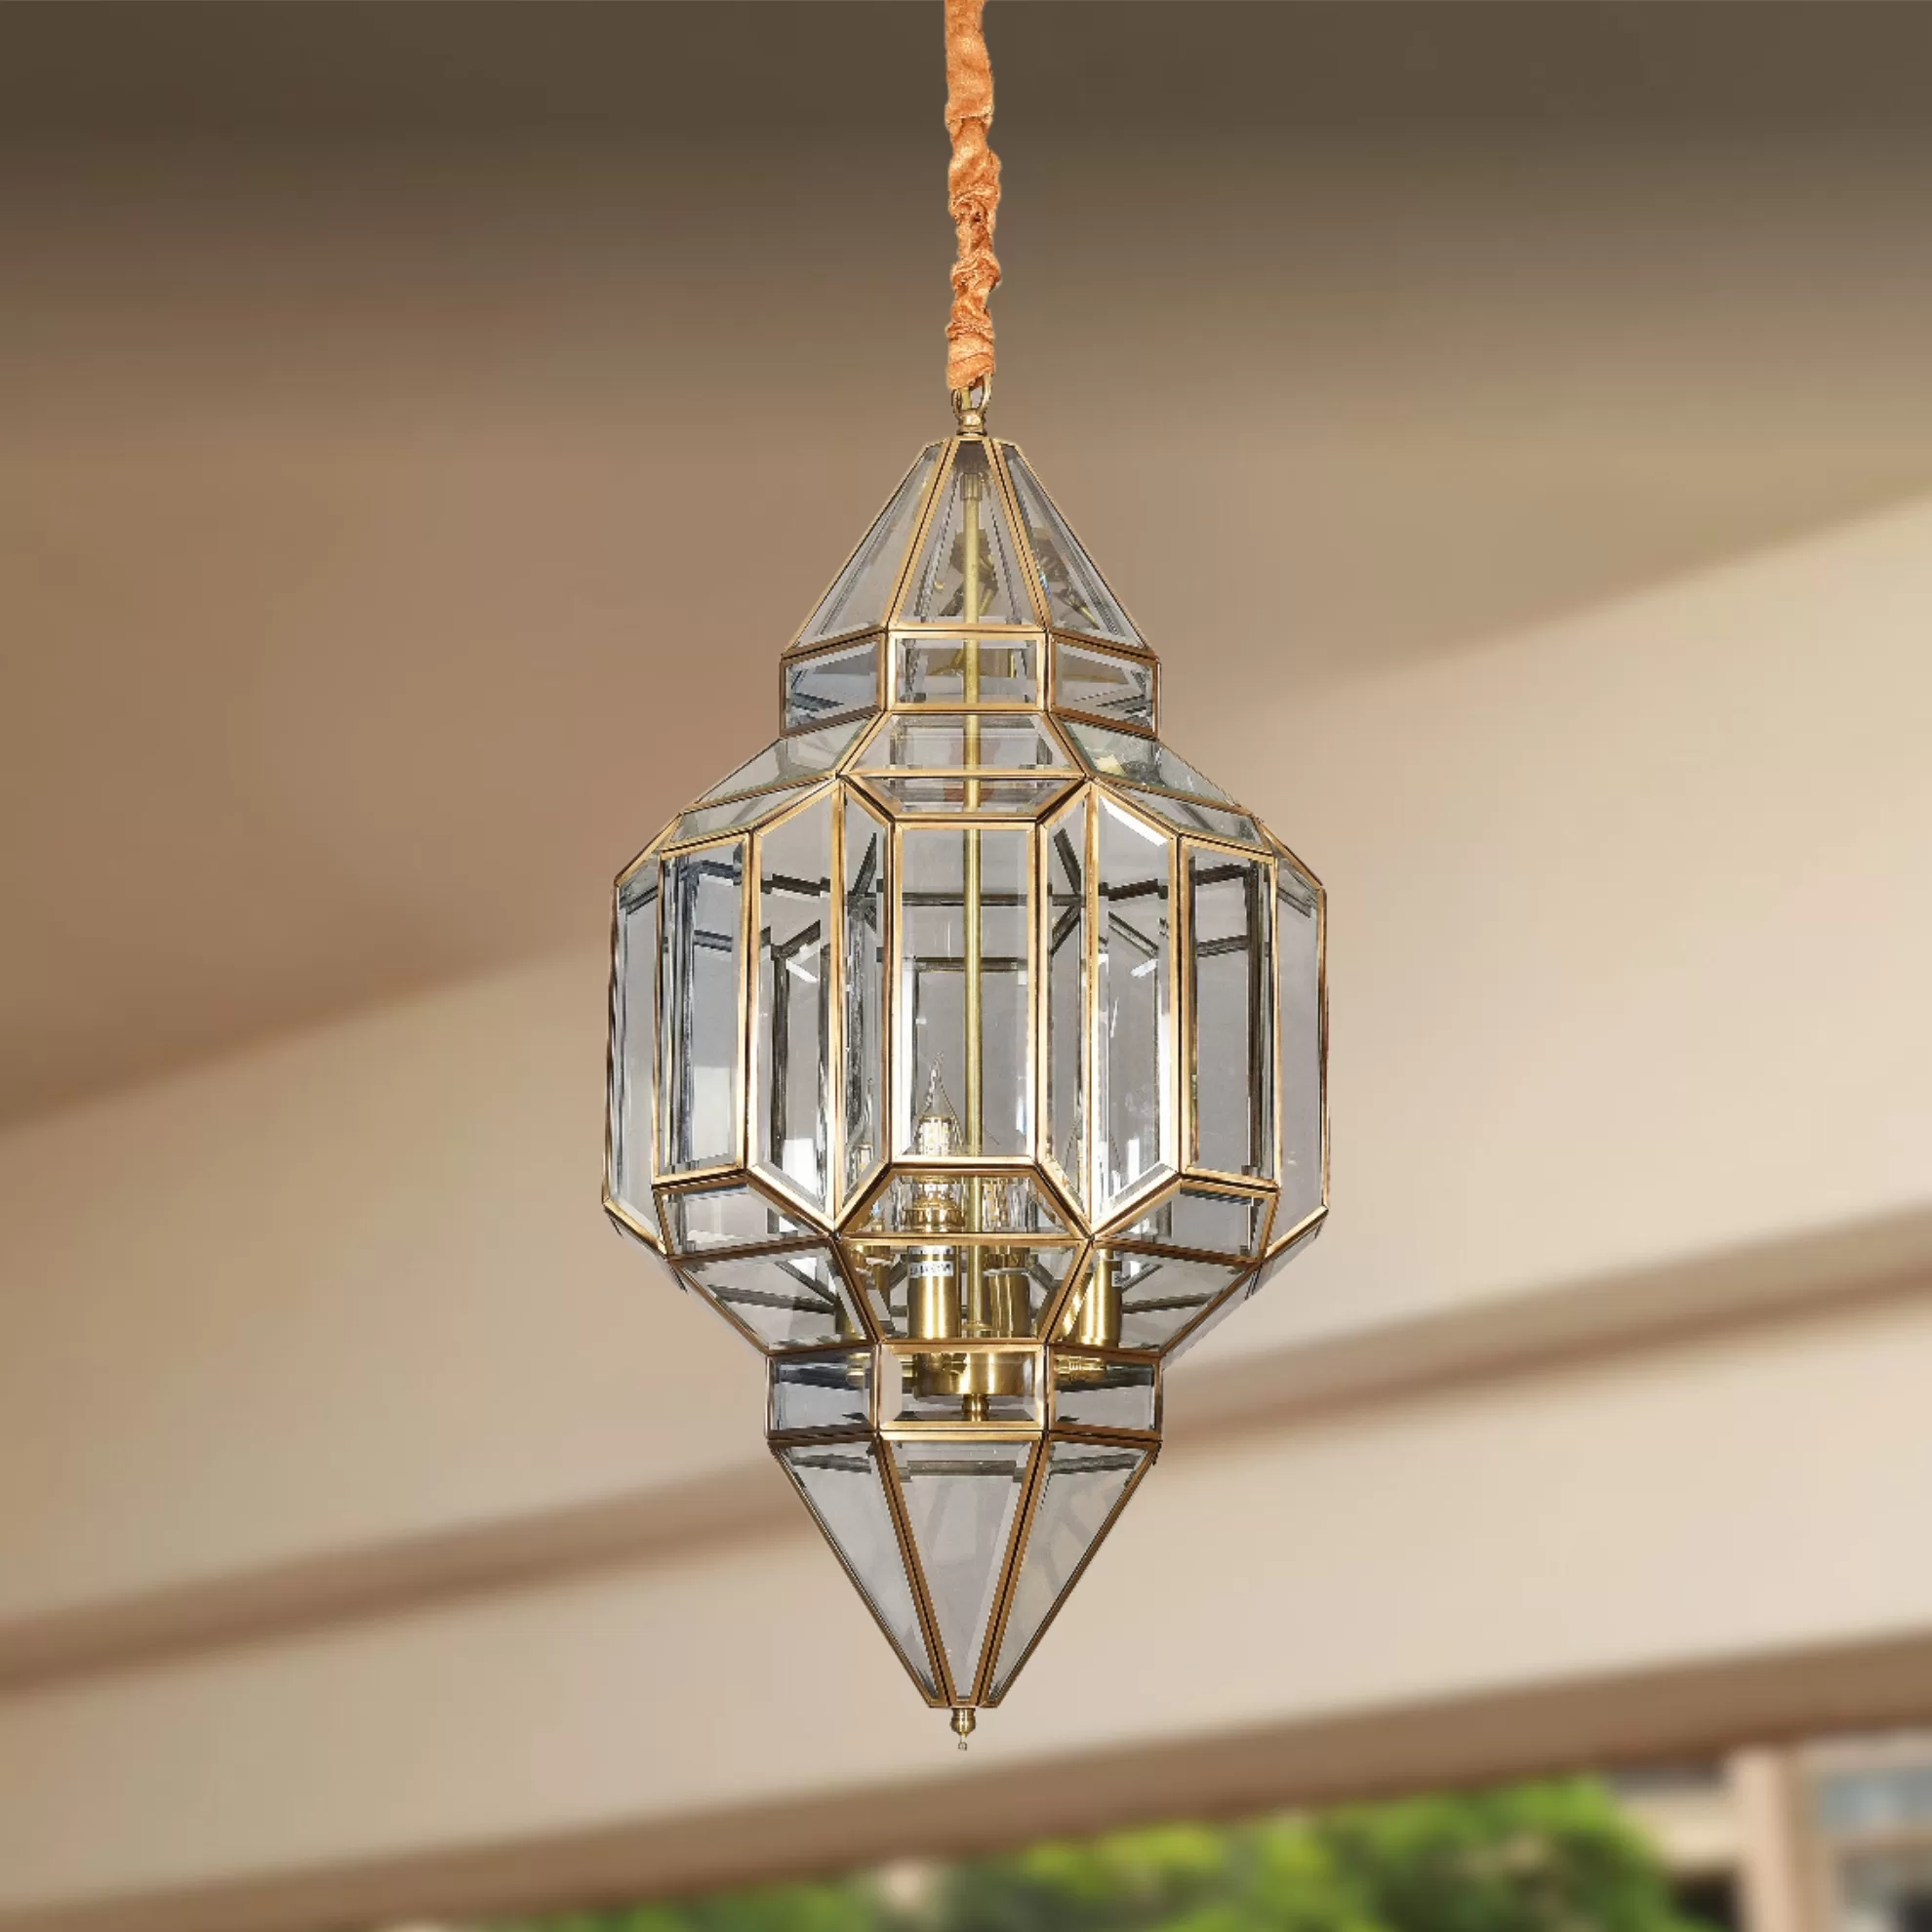 Copper hanging pendant lights